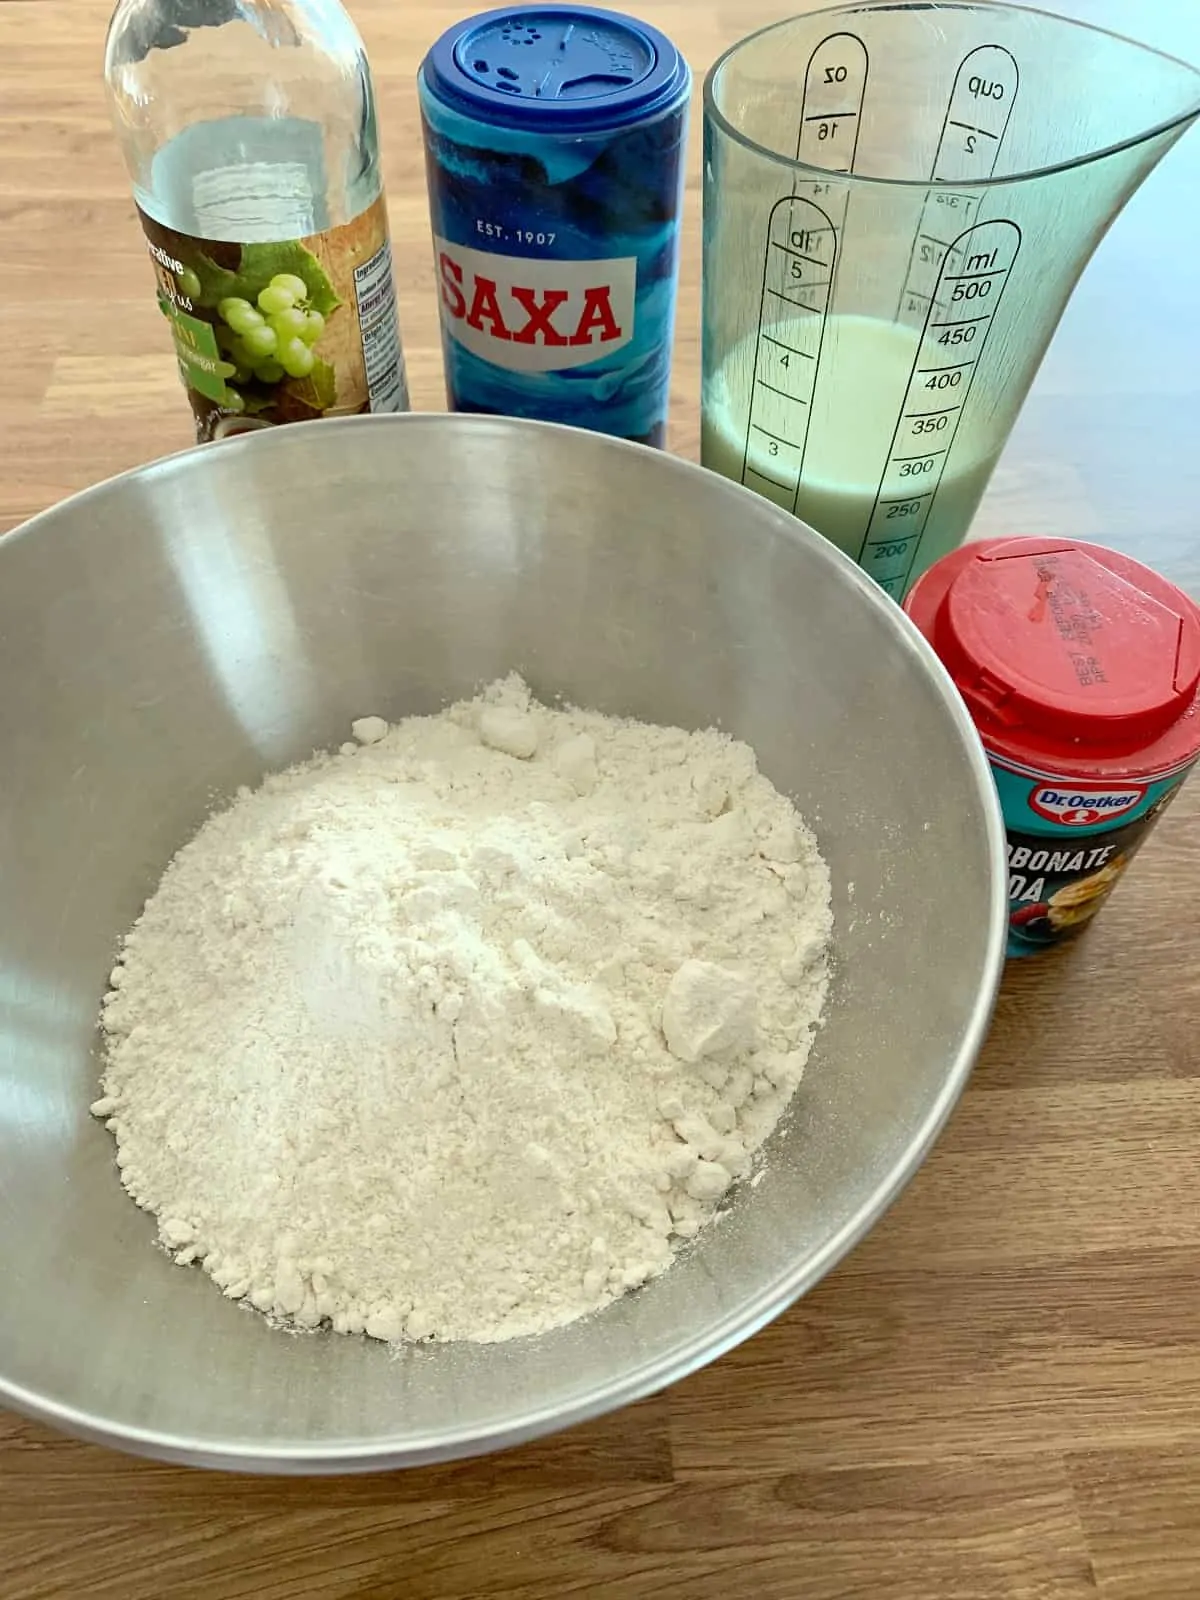 Ingredients for soda bread, bowl of flour, vinegar, salt, milk, bicarbonate of soda.